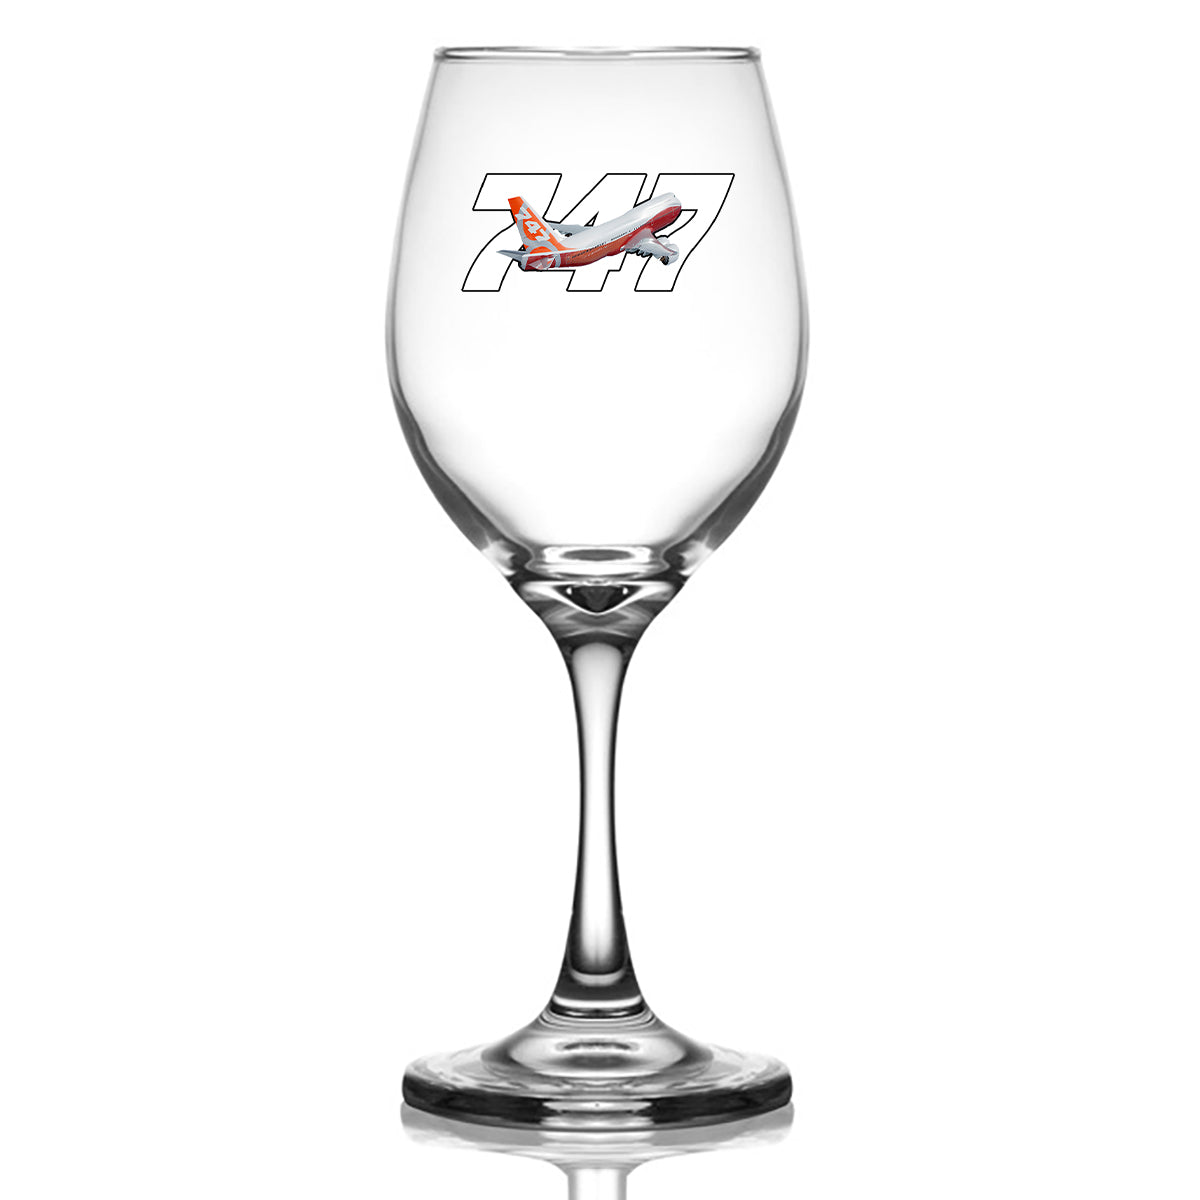 Super Boeing 747 Intercontinental Designed Wine Glasses